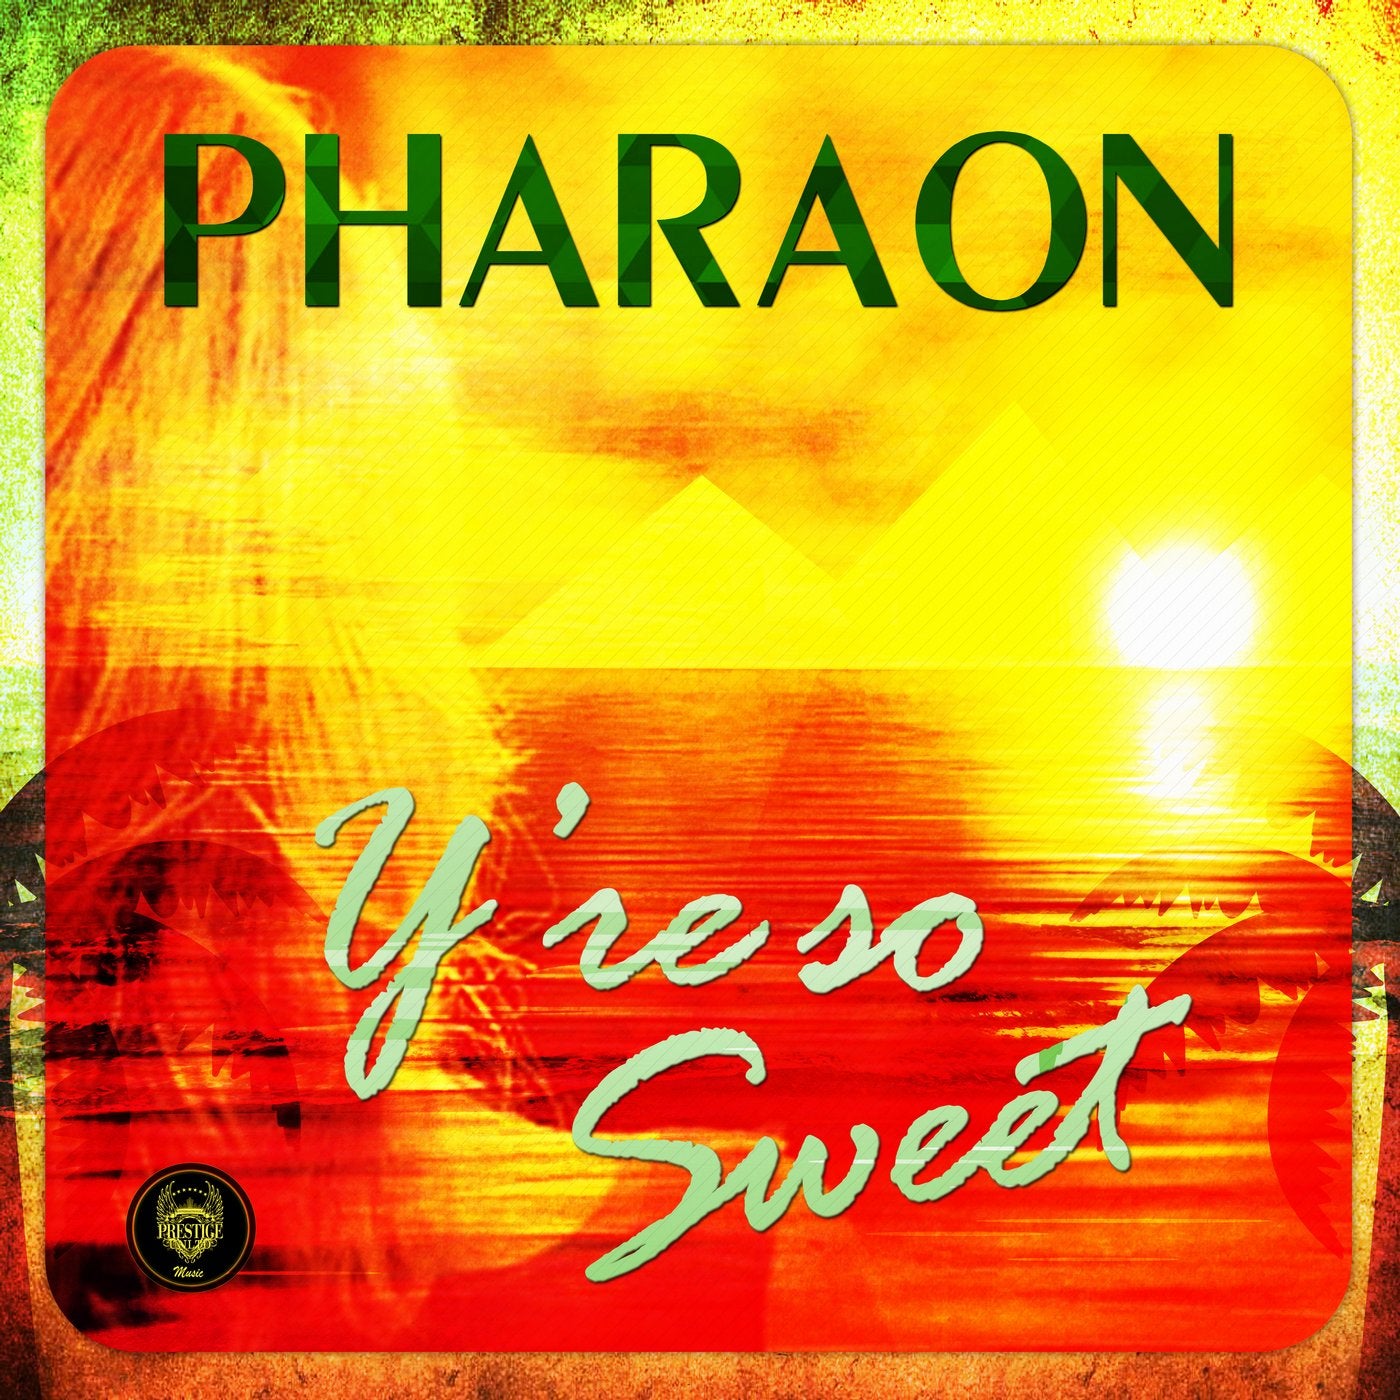 Прощай фараон. Pharaon альбом. Pharaon Dream - etno Music collection (2004). You're so Sweet.